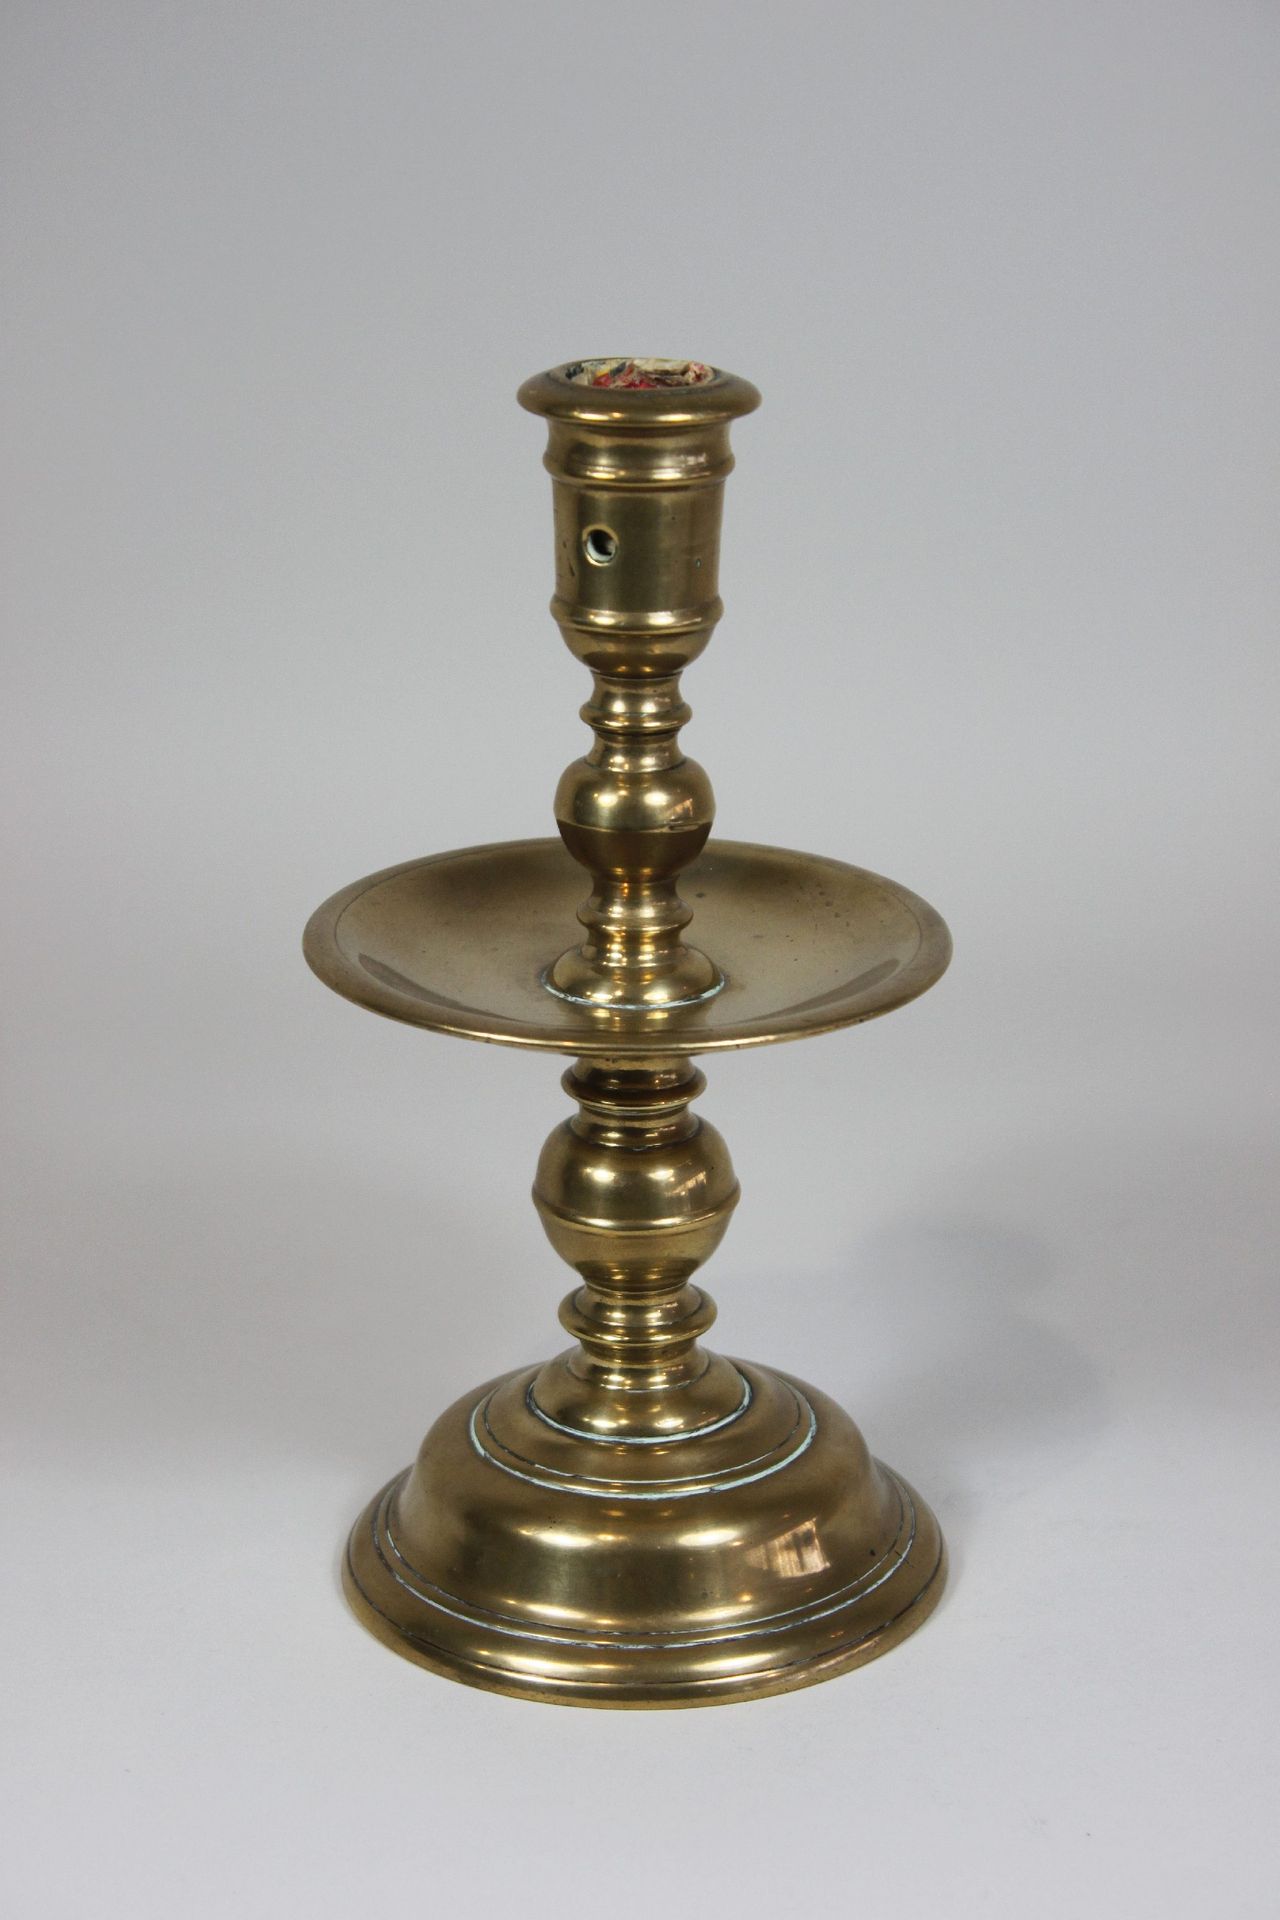 Leuchter, 17. Jh., Messing 烛台，17世纪，黄铜铸造，单火。高：22厘米。状况良好，与年龄有关。